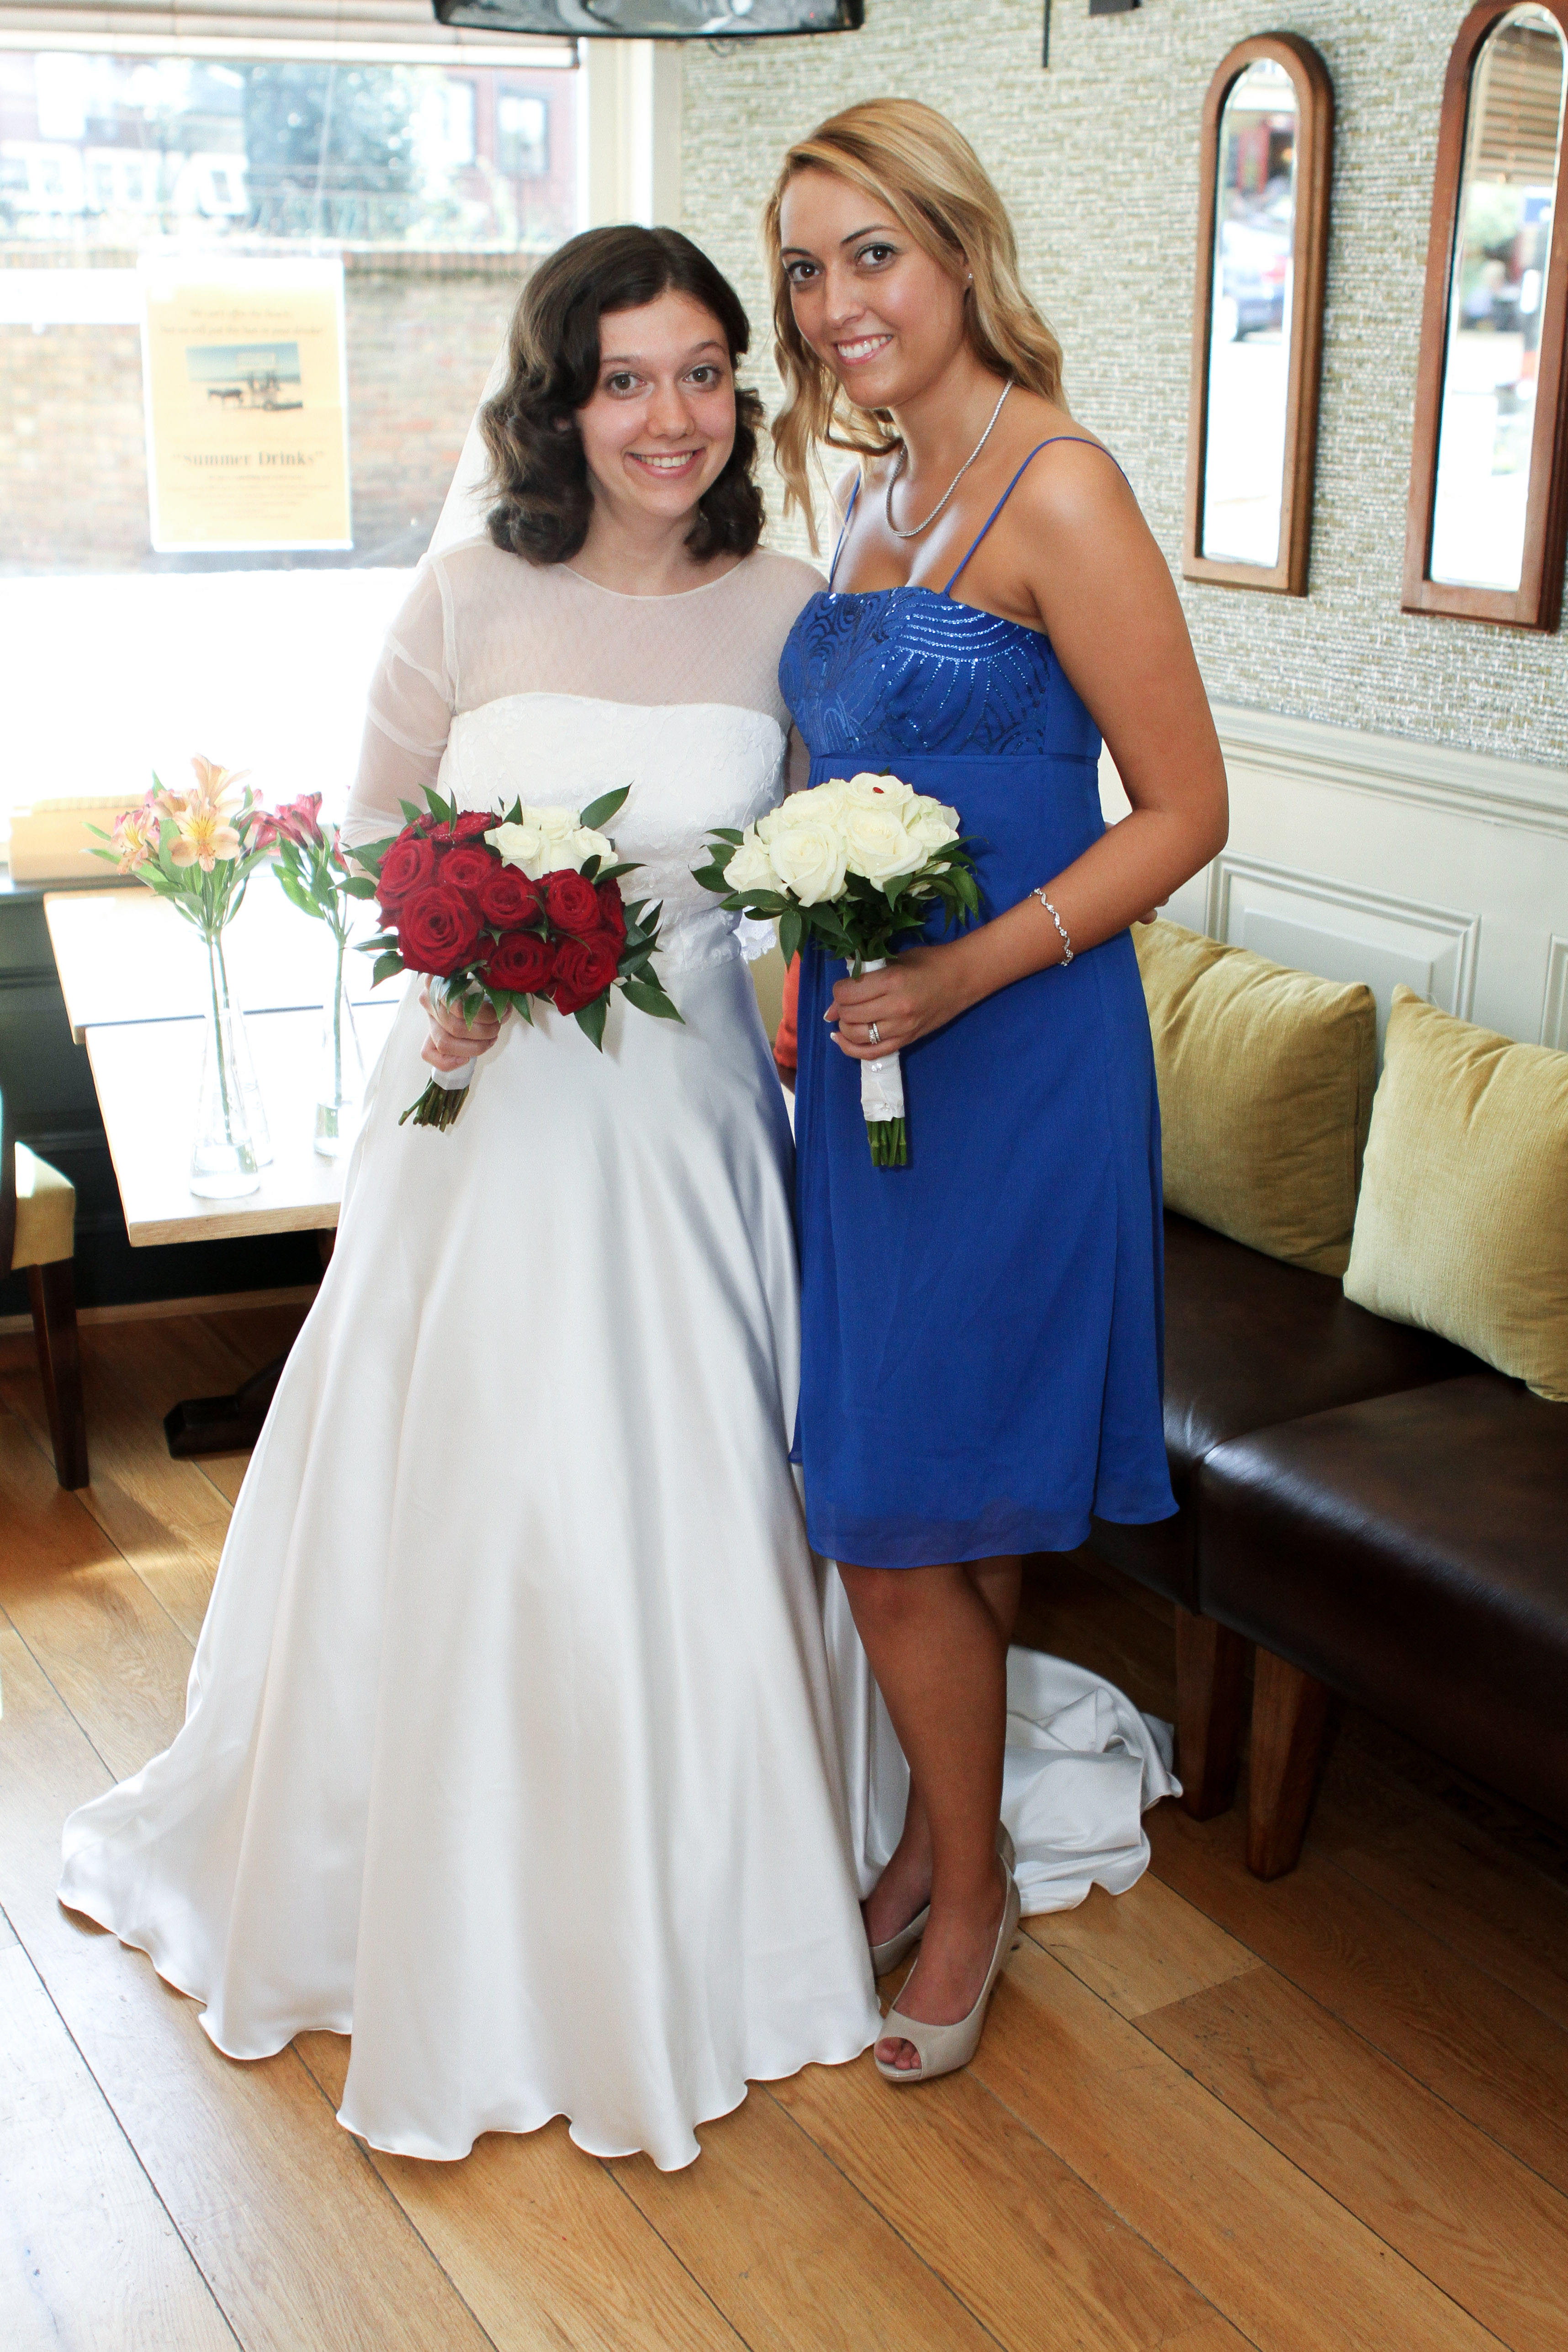 Tatyana in her wedding dress, smiling alongside bridesmaid, Laura